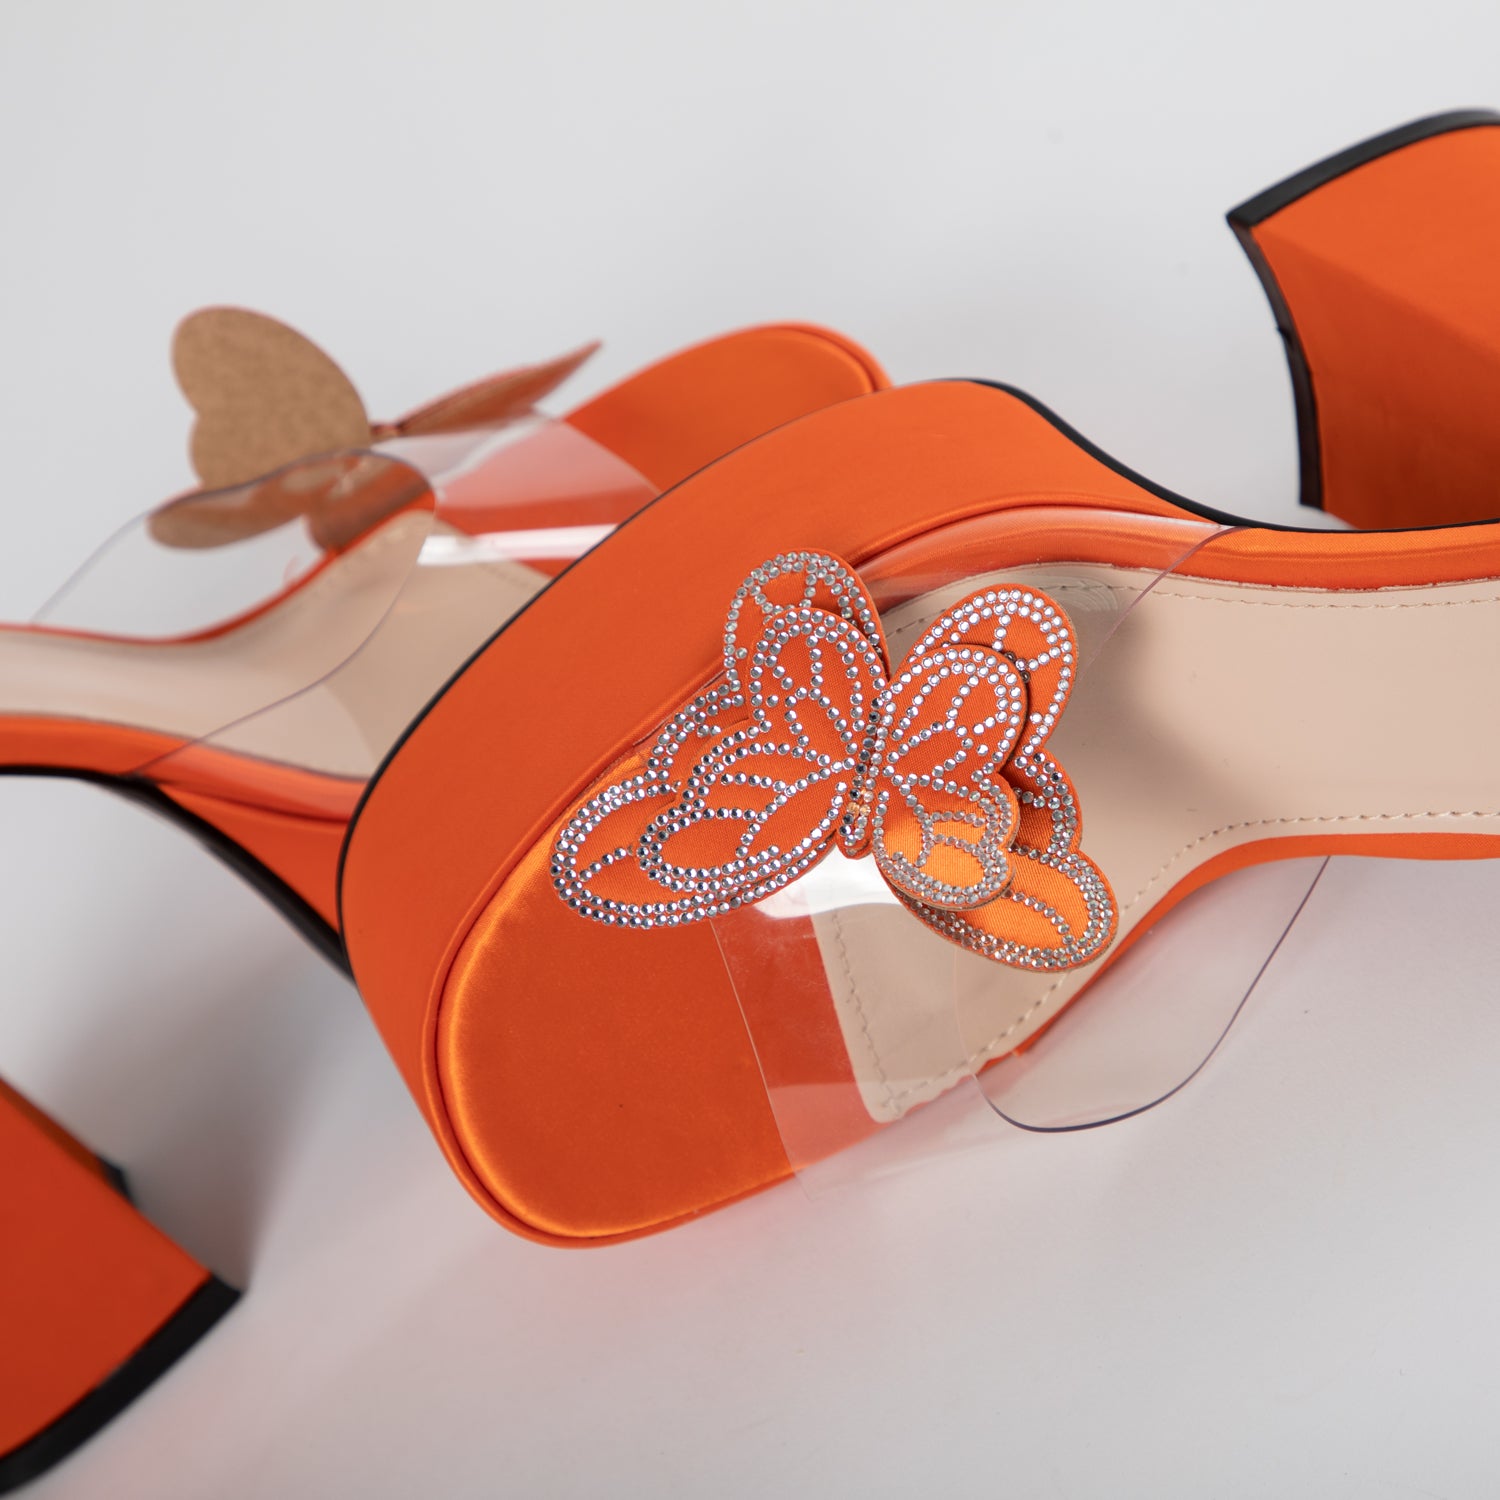 RAID Elizah Platform Butterfly Heel In Orange